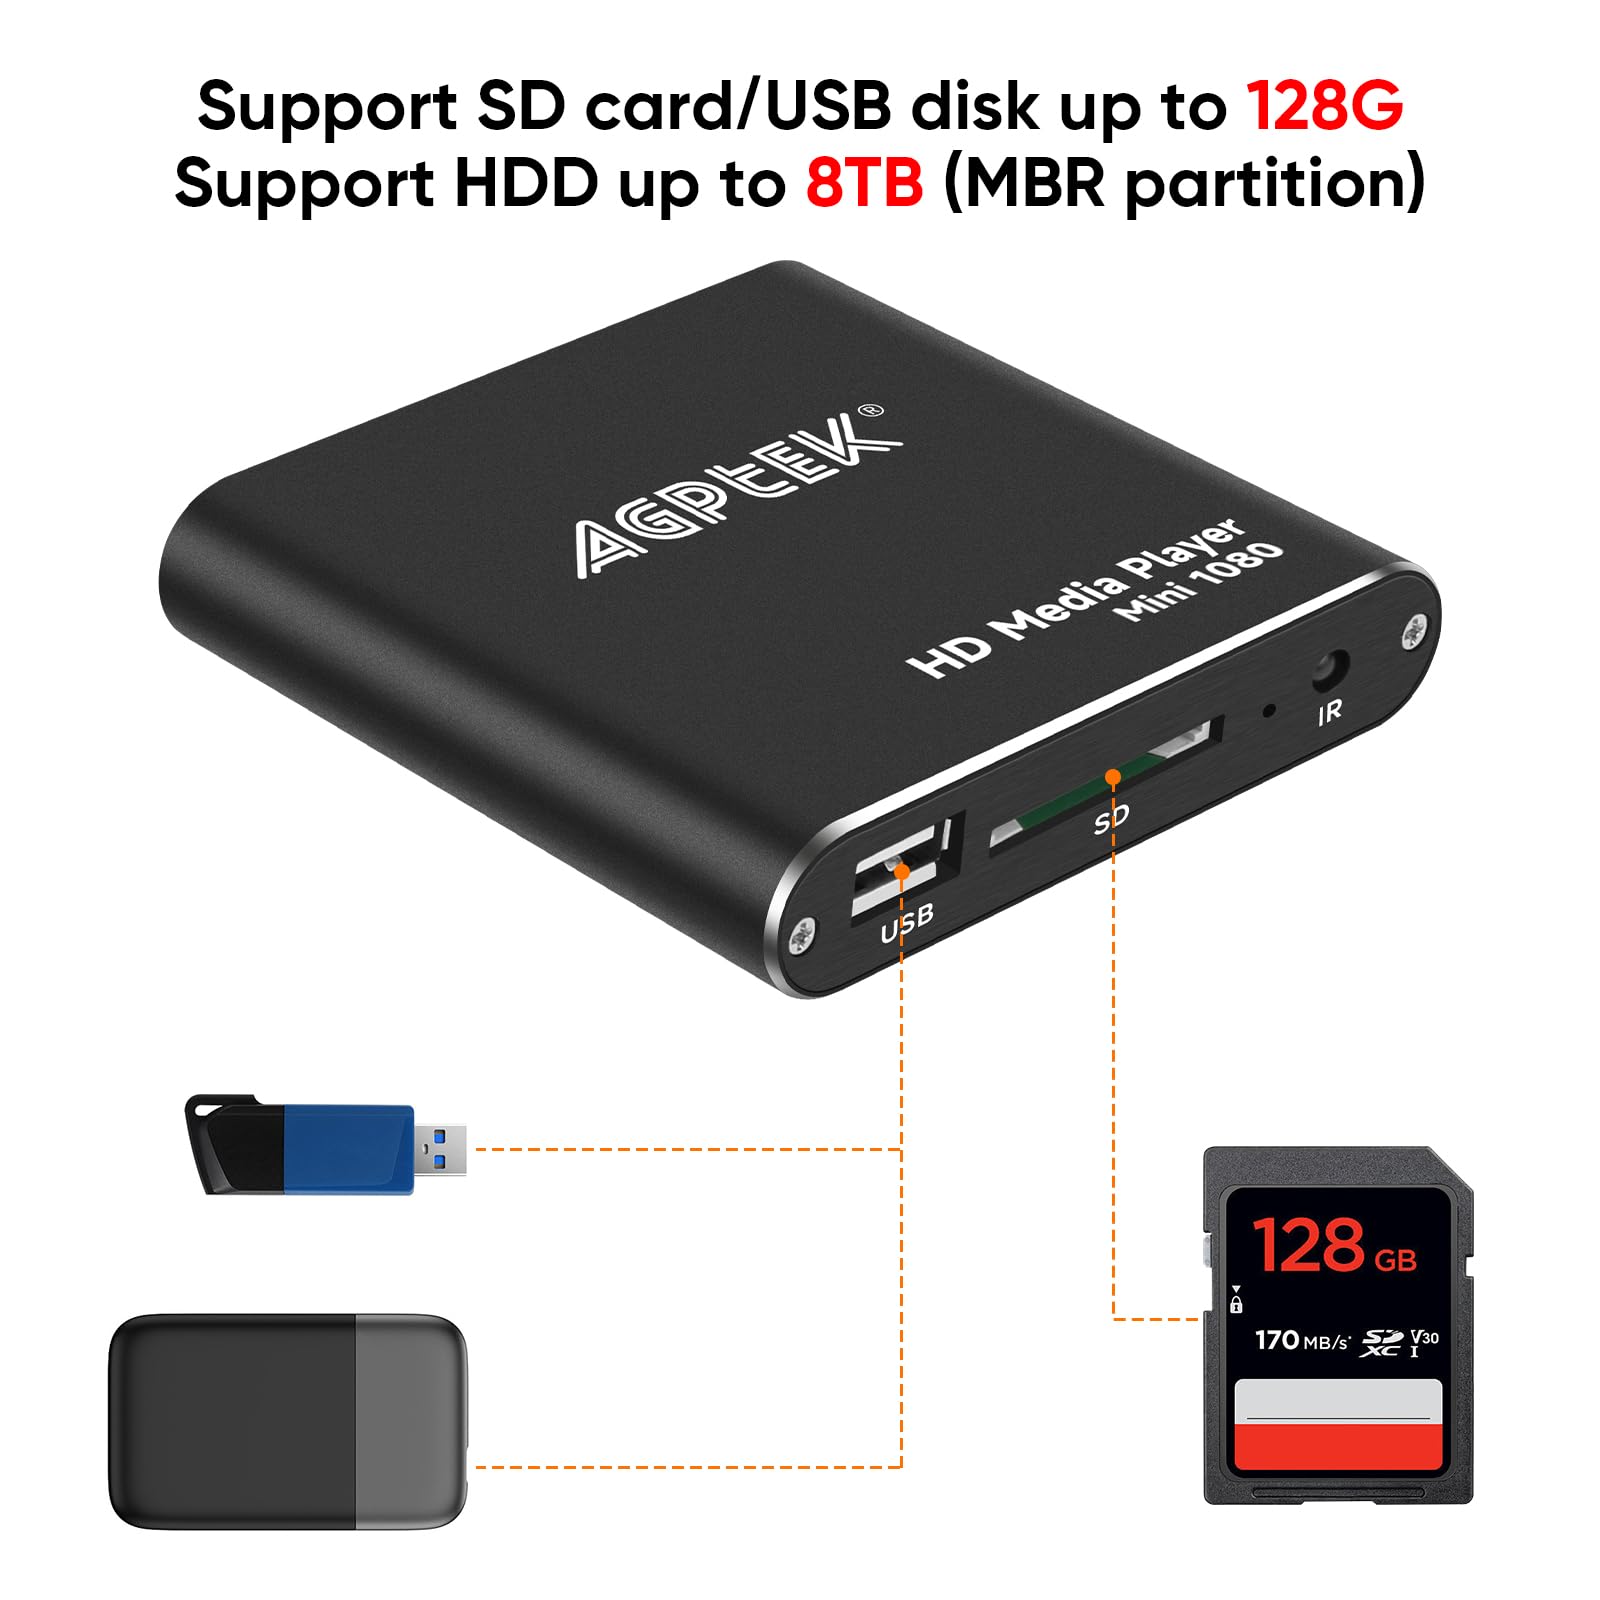 HDMI Media Player, Black Mini 1080p Full-HD Ultra HDMI Digital Media Player for -MKV/RM- HDD USB Drives and SD Cards